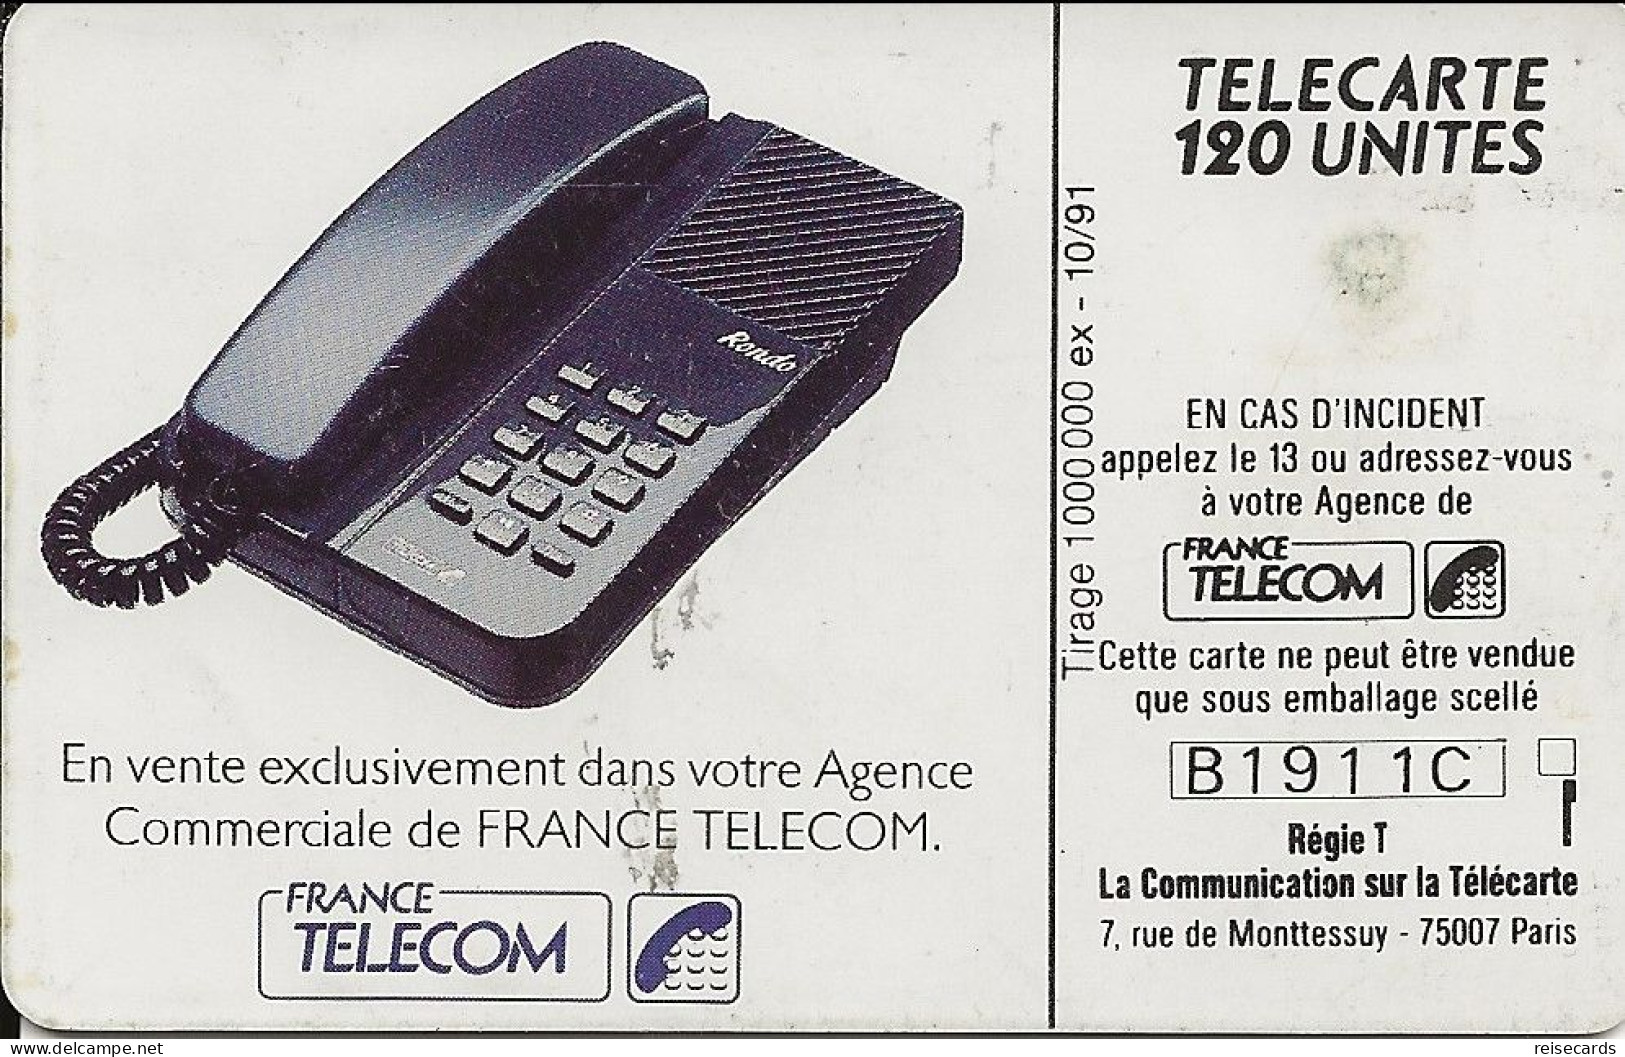 France: France Telecom 10/91 F190 Rondo - 1991